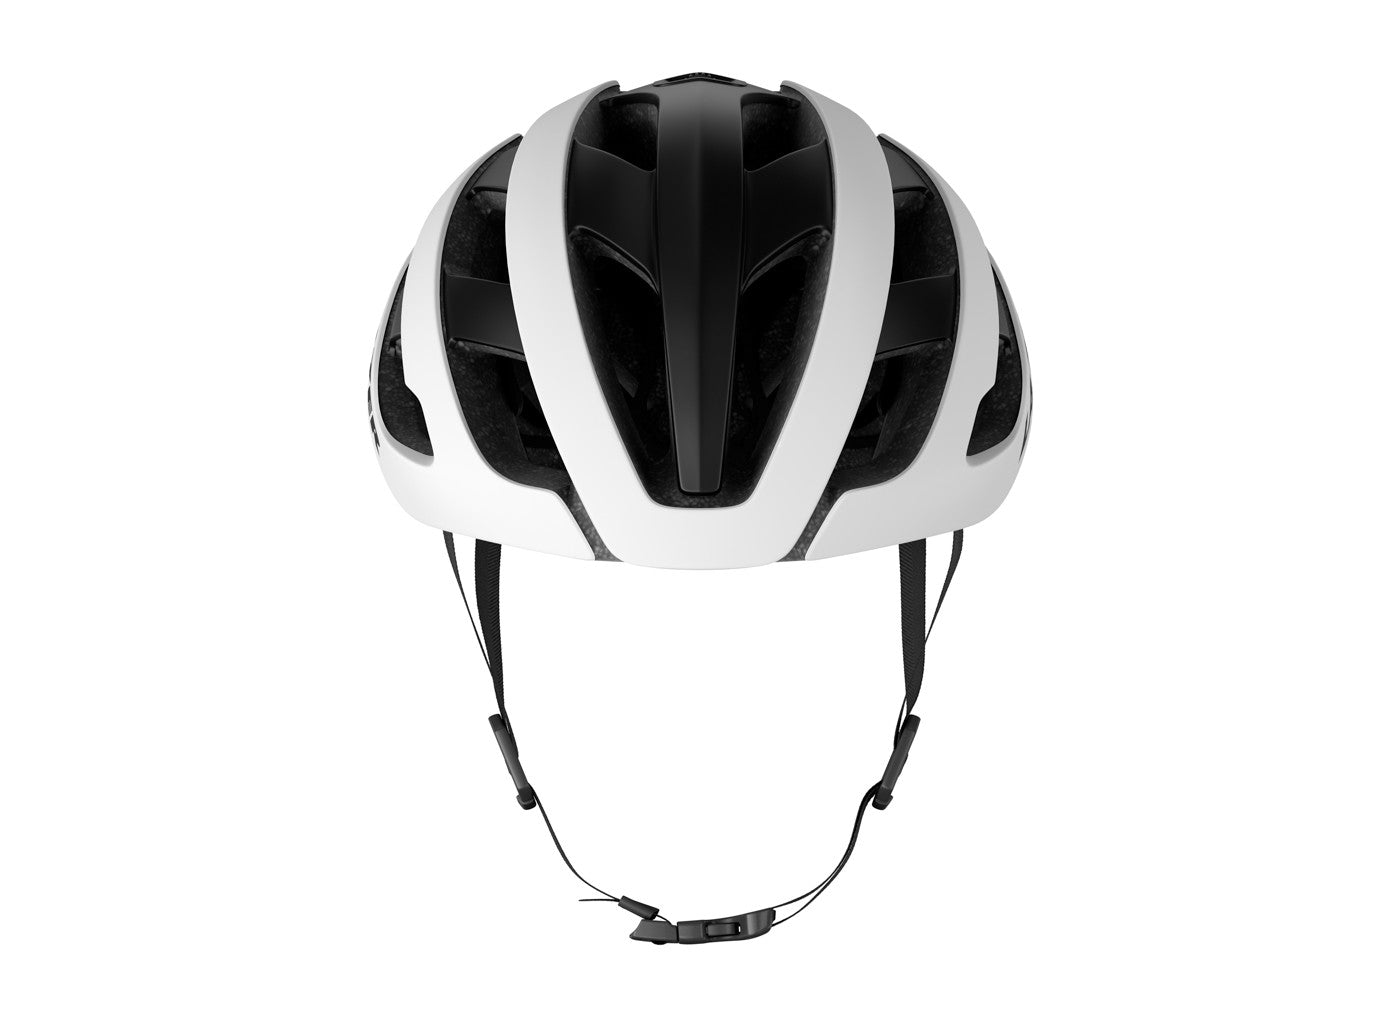 Lazer Helmet Genesis White/Black